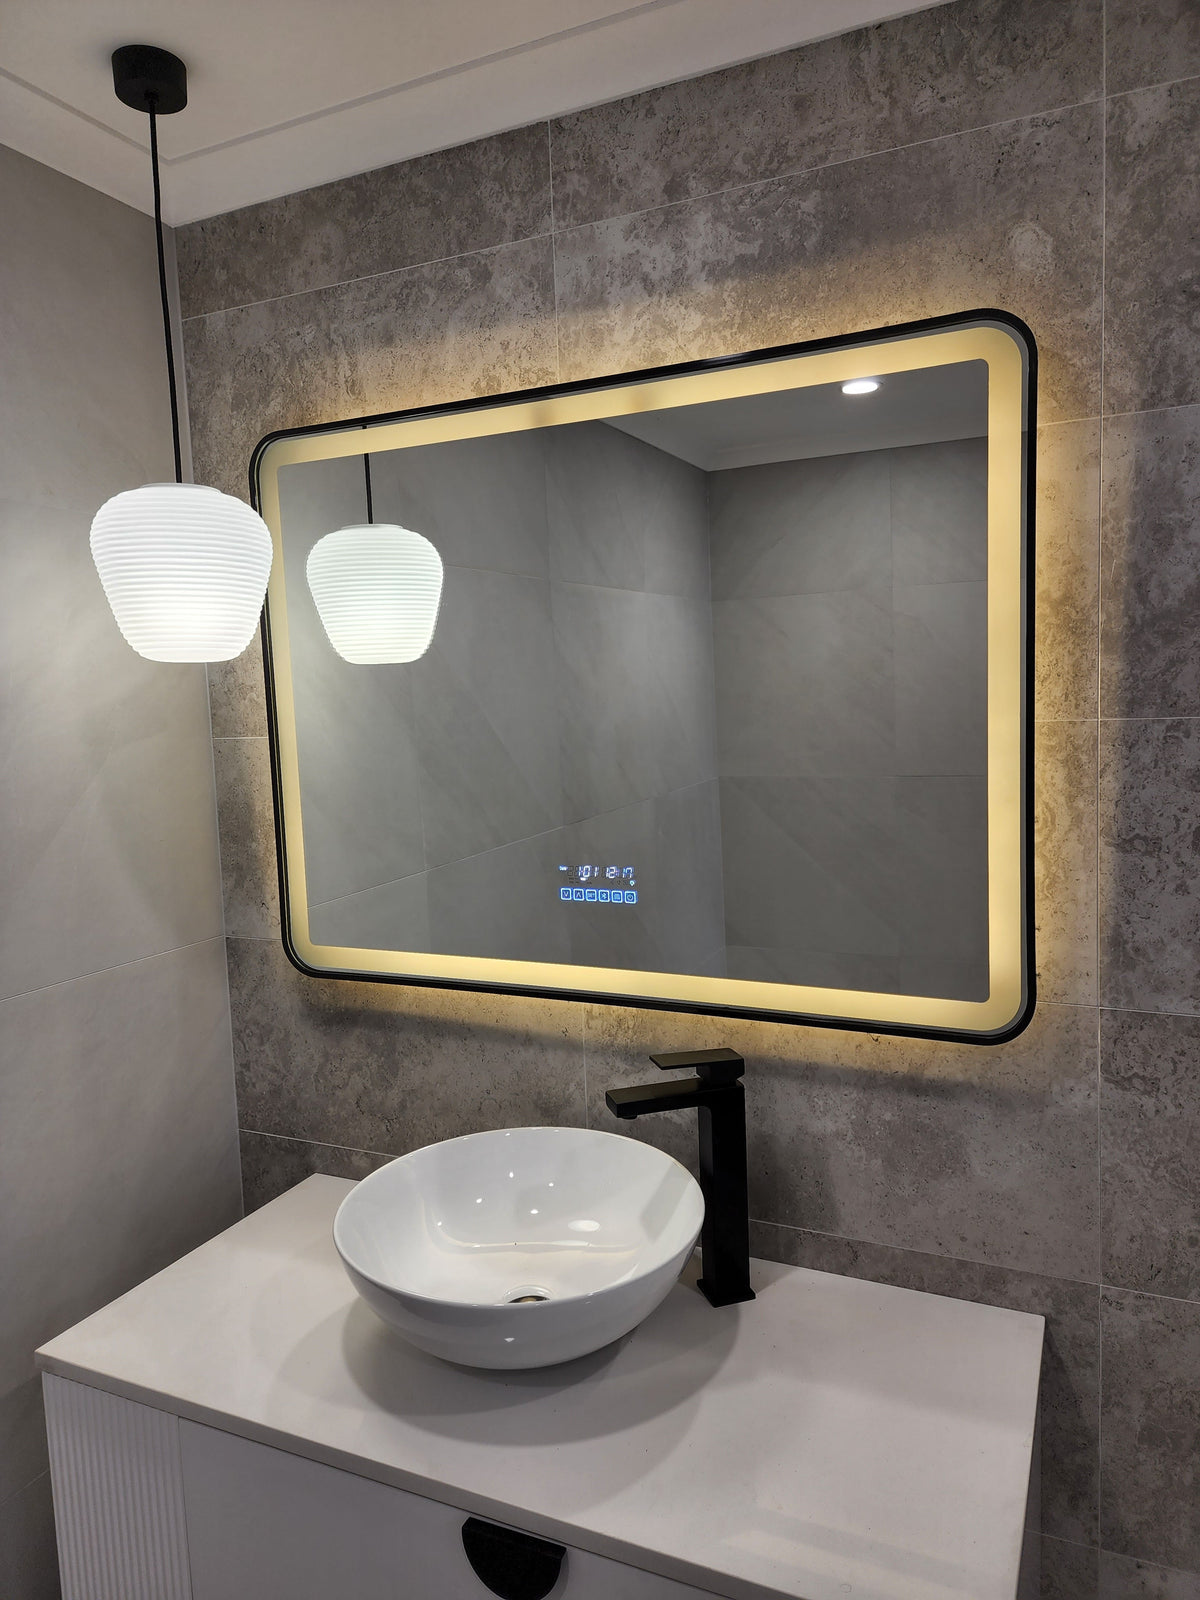 The Barcelona ~ (Elegant edition) Invogue Smart mirror